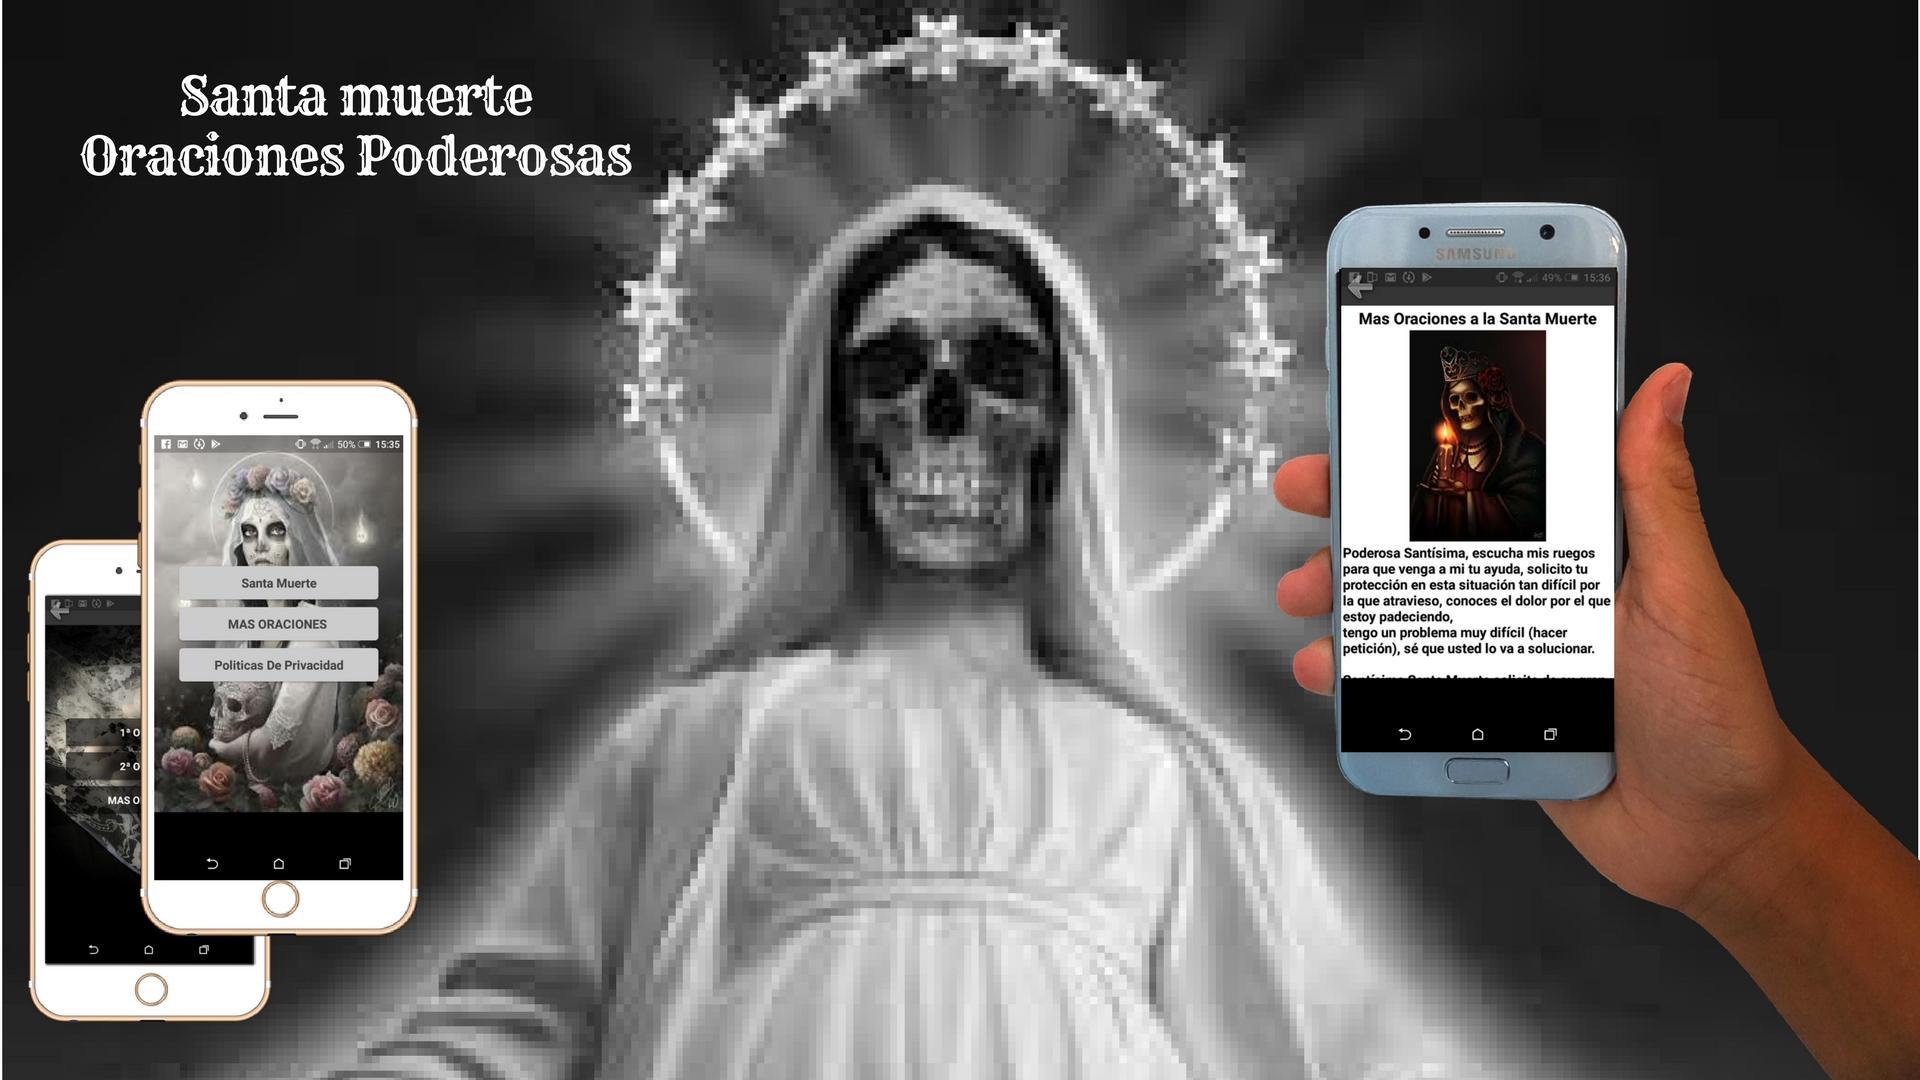 Santa Muerte Oraciones Poderosas screenshot 4.